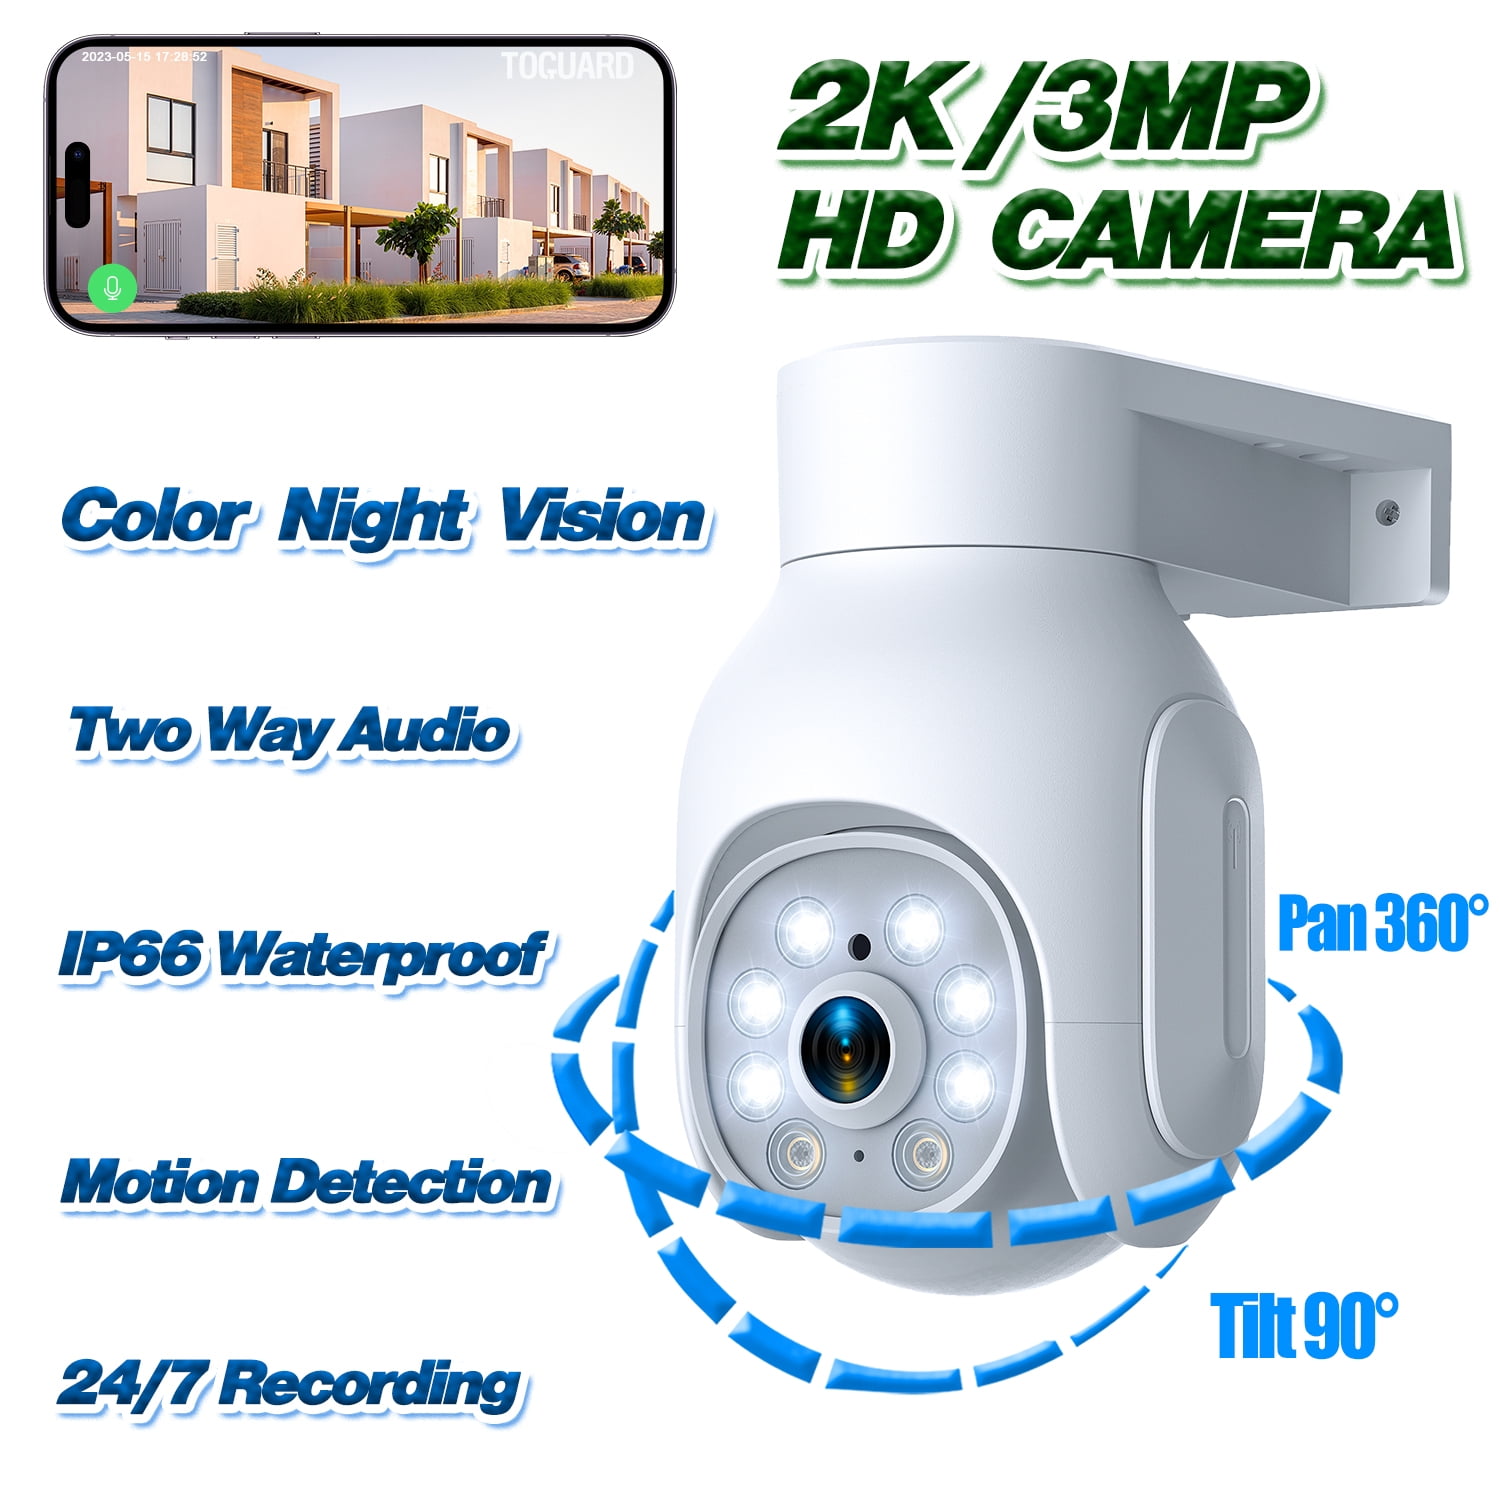 Straight Screenplay pilot Toguard SC25 2K/3MP WiFi Security Camera Outdoor PTZ Dome Surveillance  Camera - Walmart.com